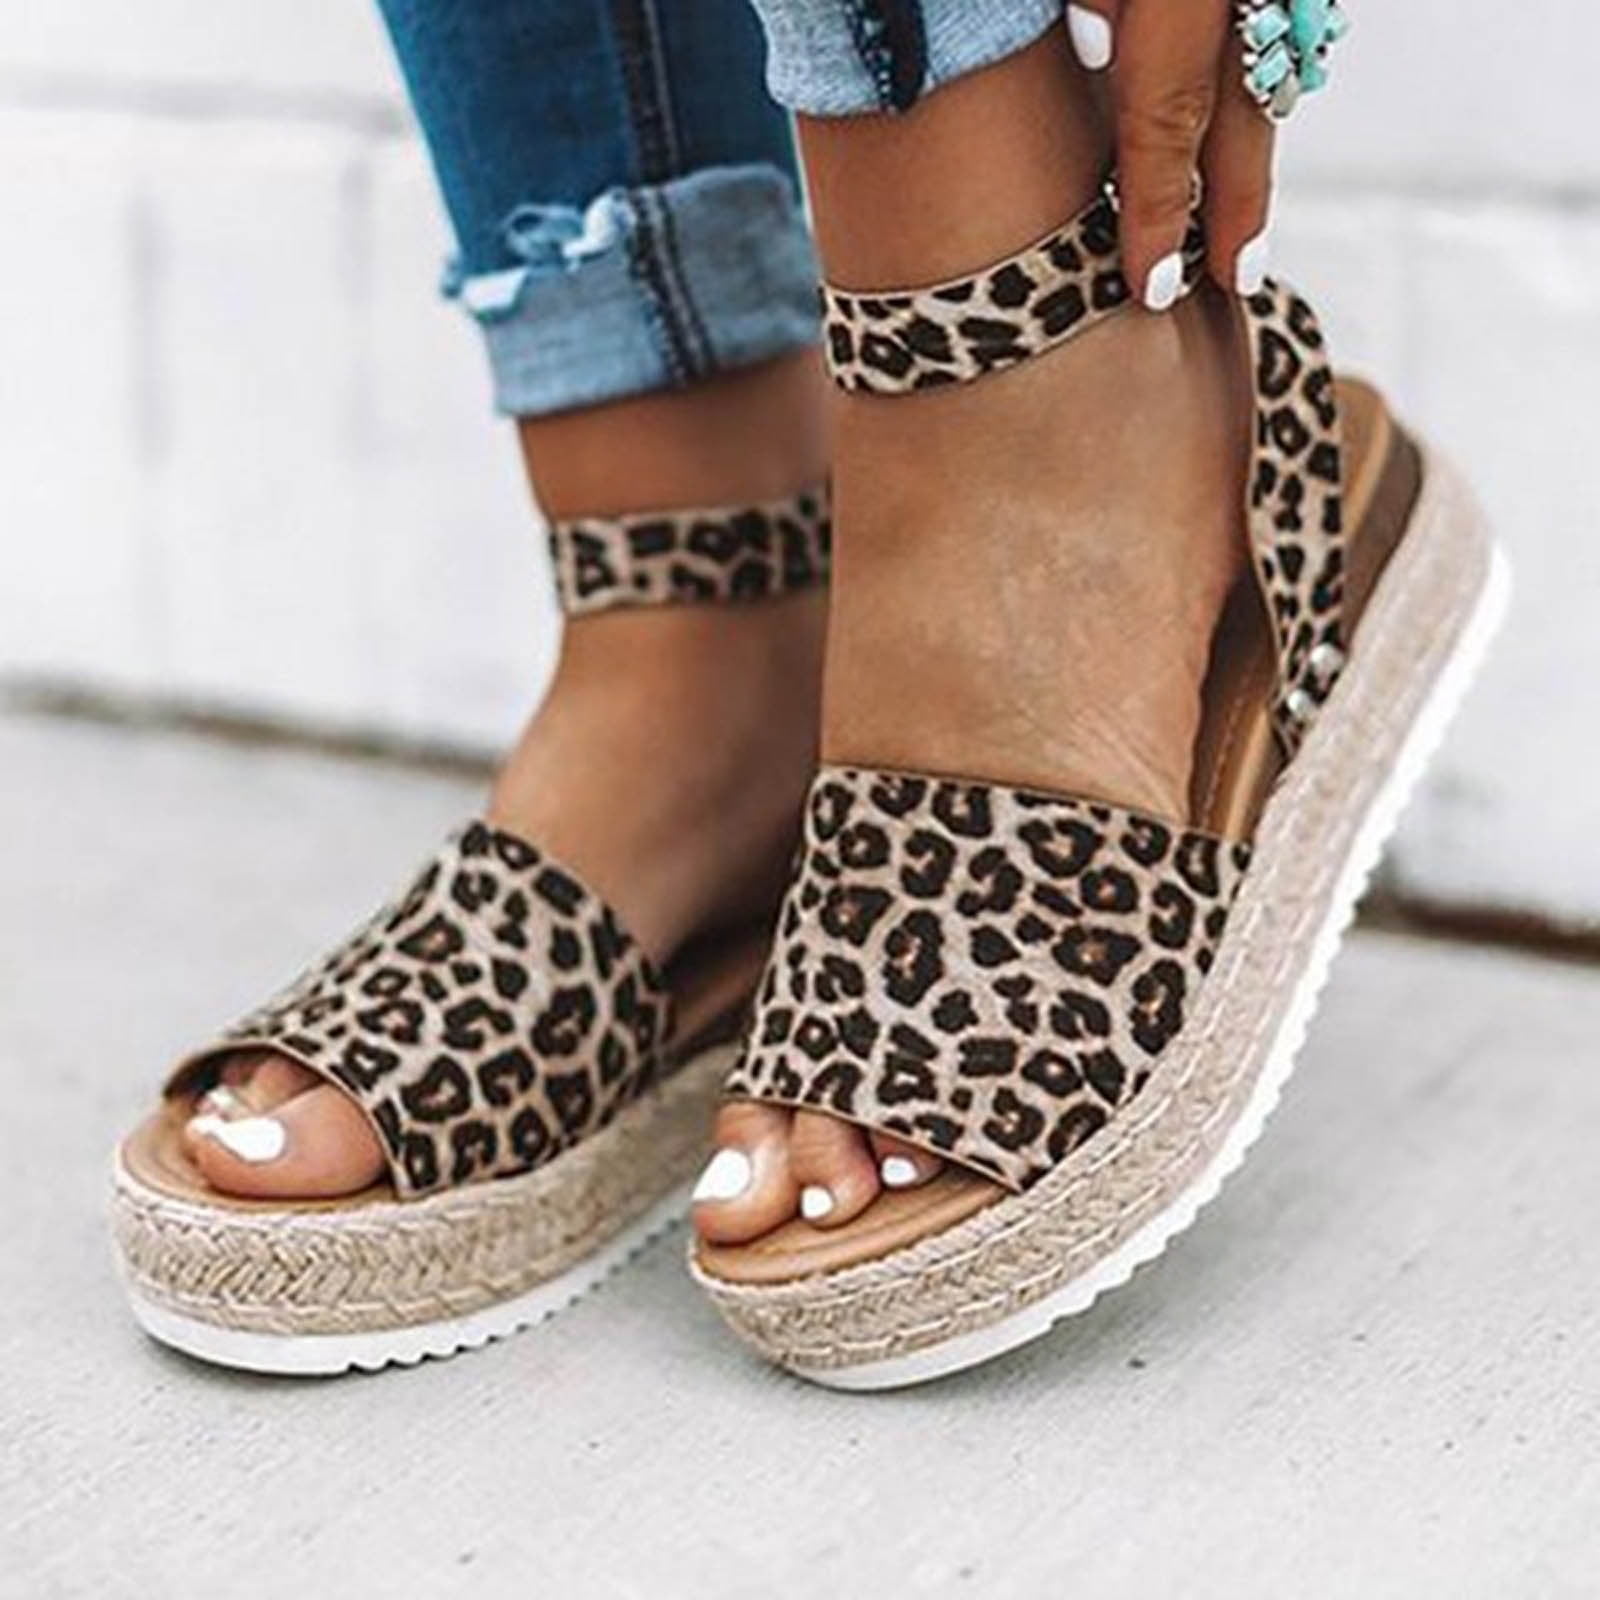 Espadrilles Wedges for Women Summer Casual Leopard Platform Sandals Open Toe Ankle Strap Sandal - Walmart.com